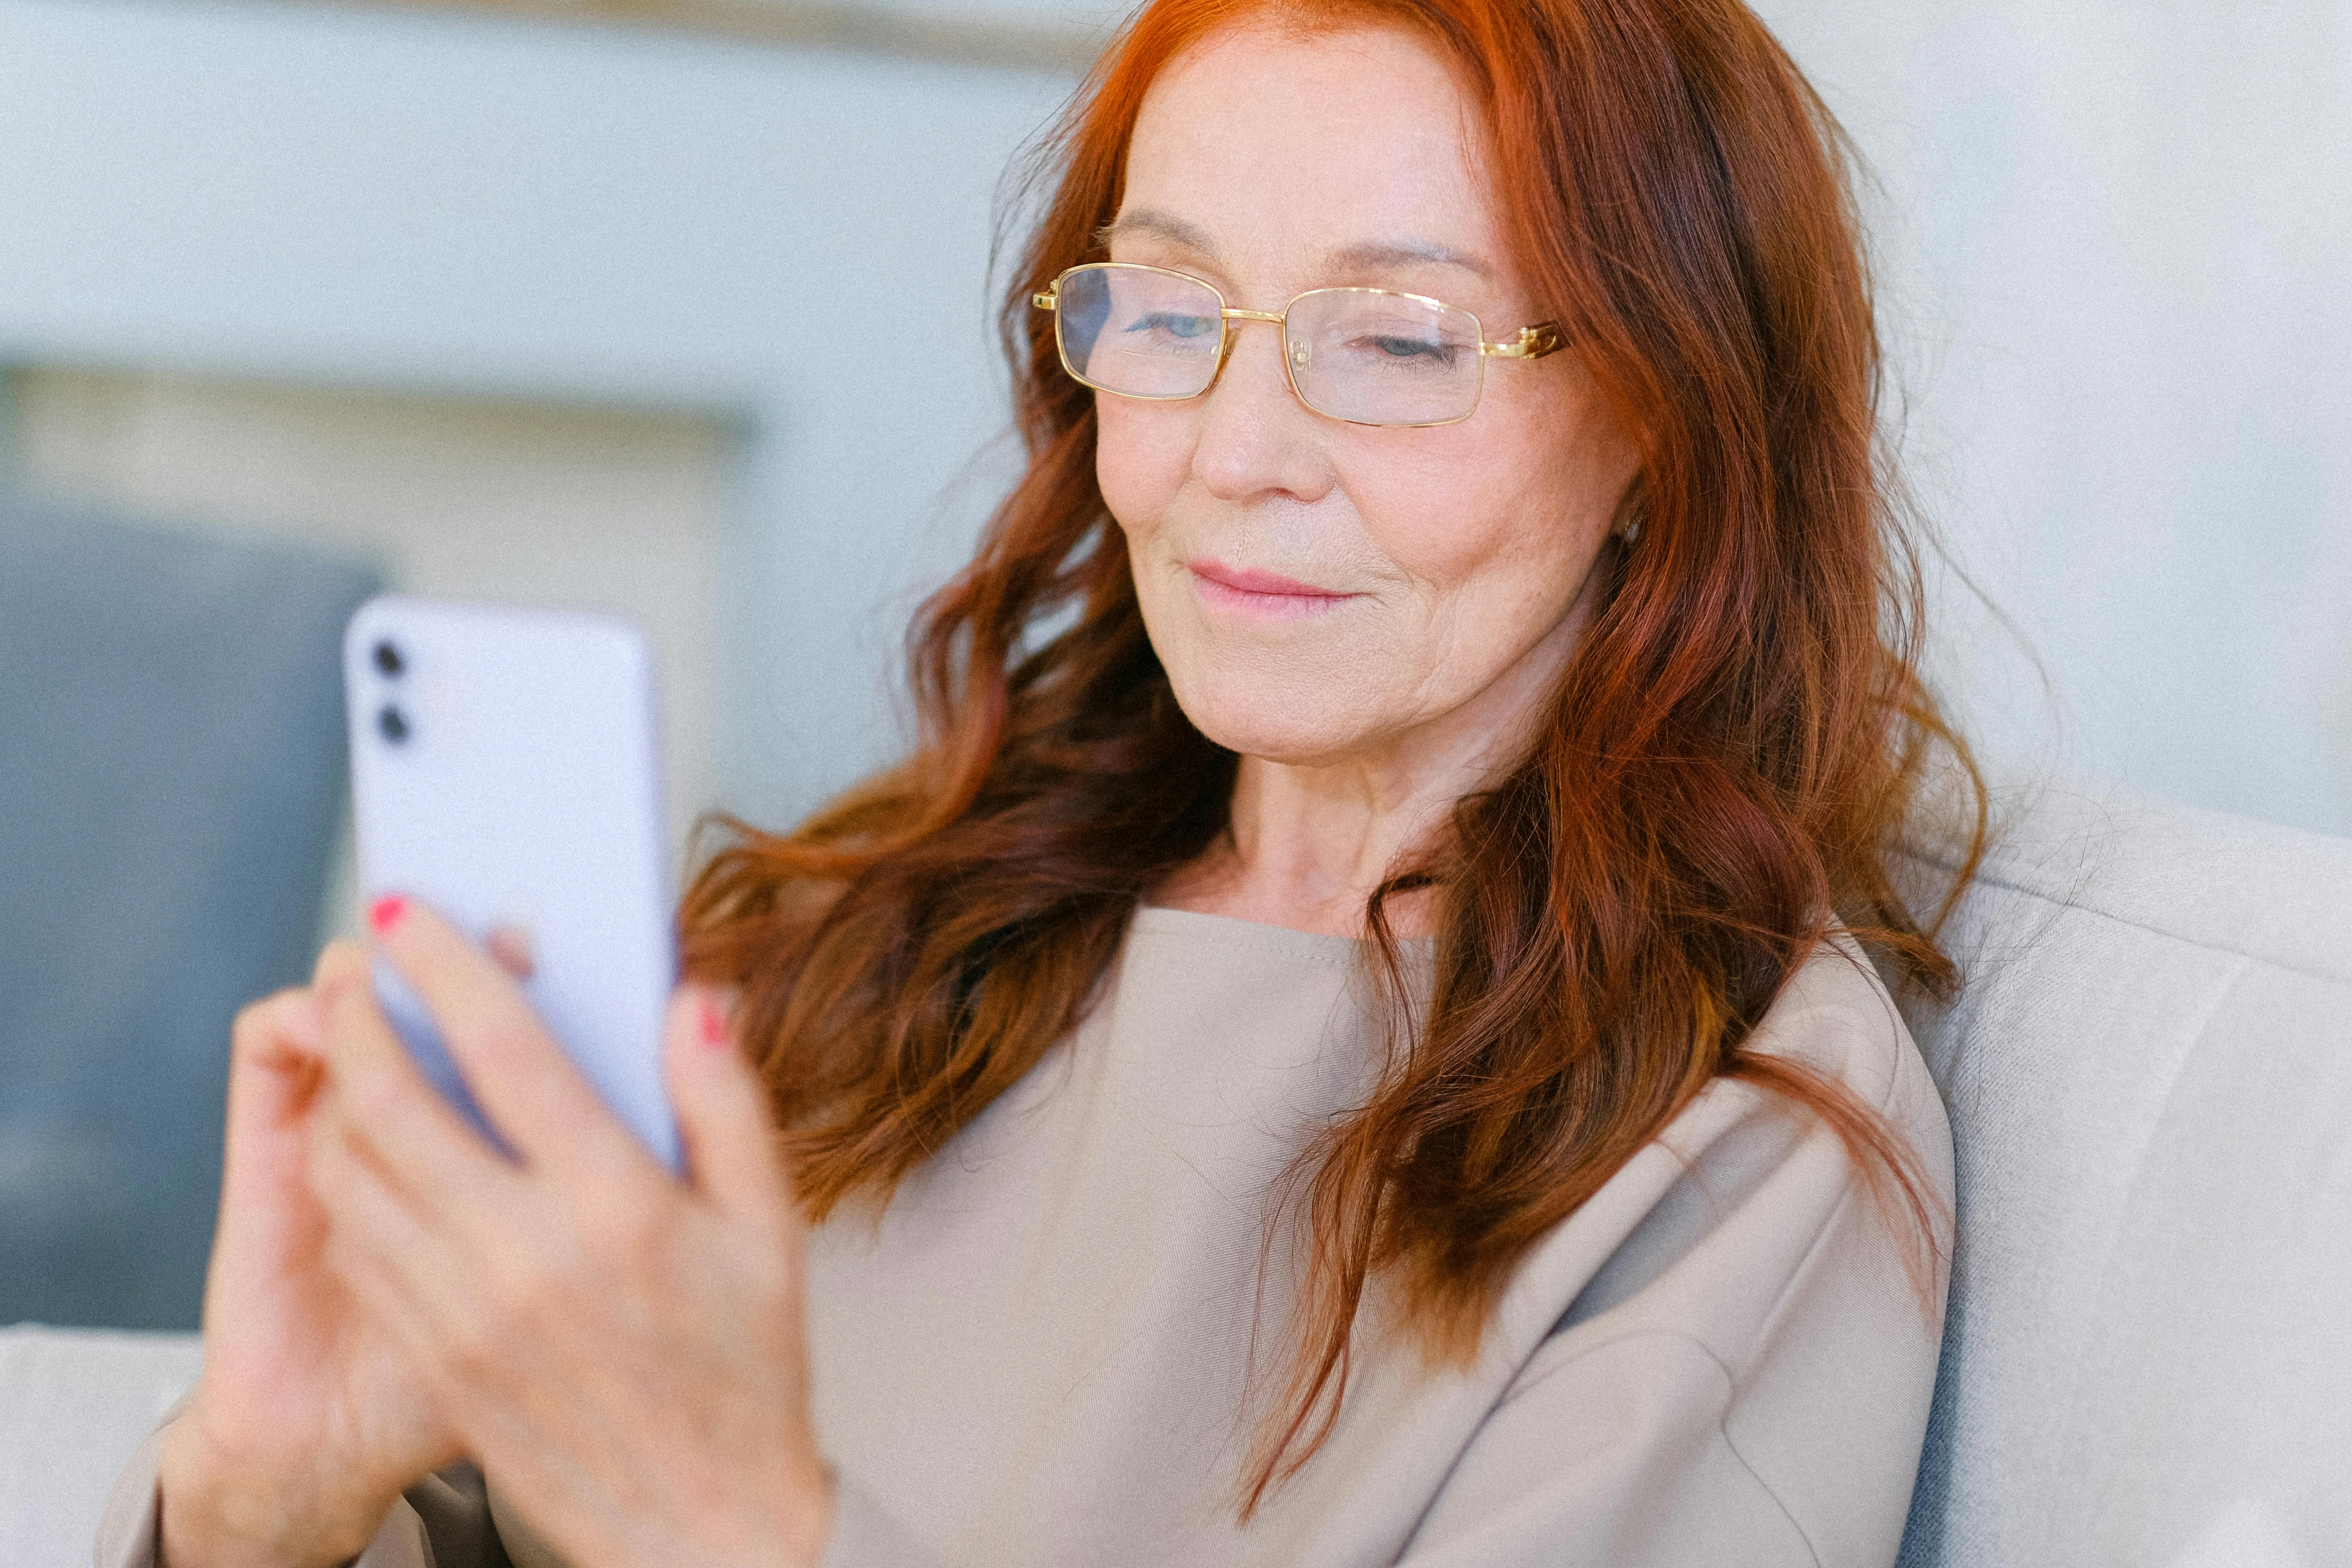 Elderly woman smiles at her phone | Source: Pexels